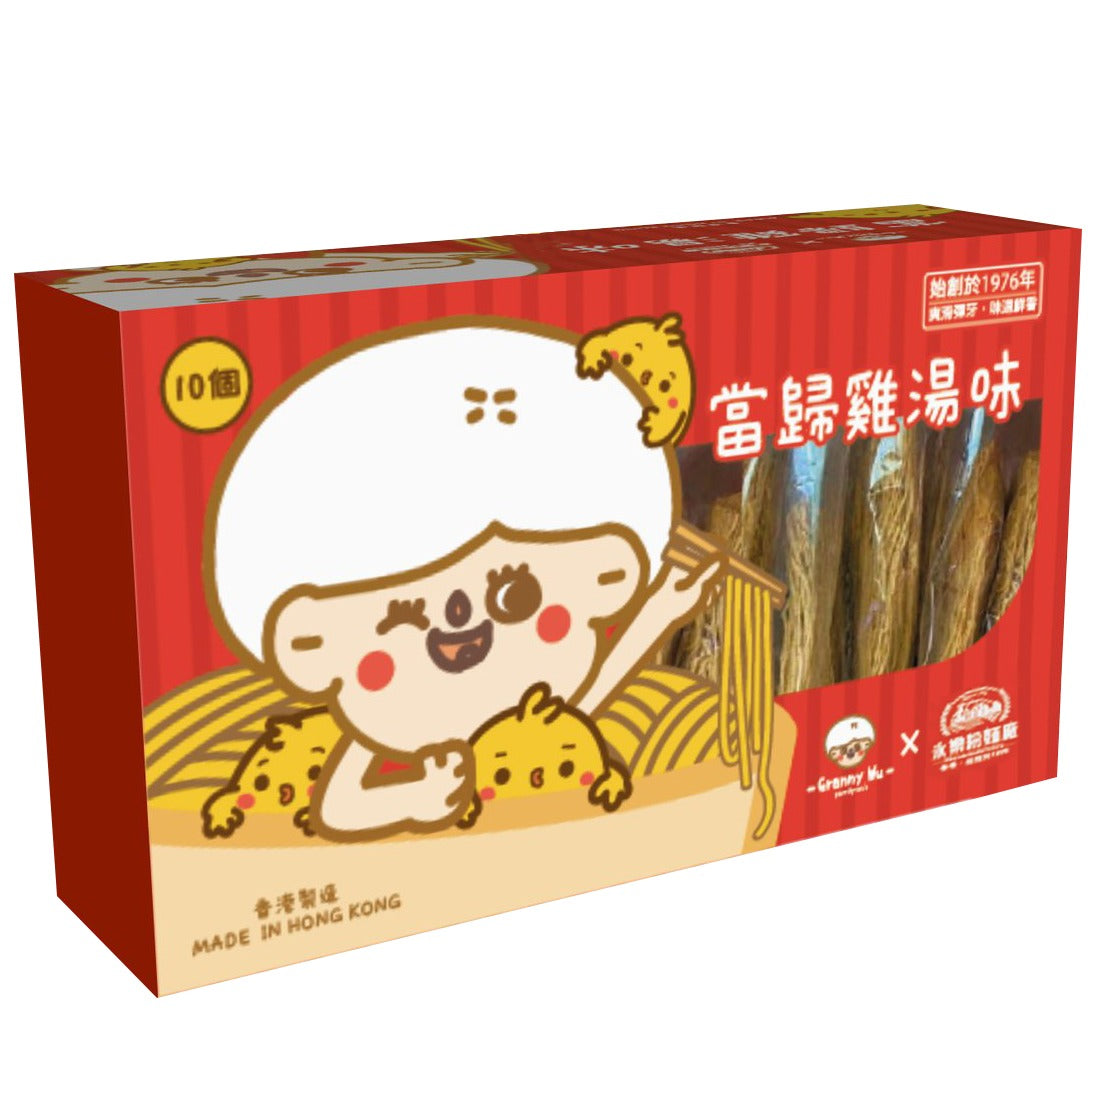 WING LOK Handmade Noodle Angelica Chicken Noodle Soup Gift Box (10 pcs) 450g 永樂粉麵廠 - 當歸雞湯麵禮盒 (10個裝) 450g